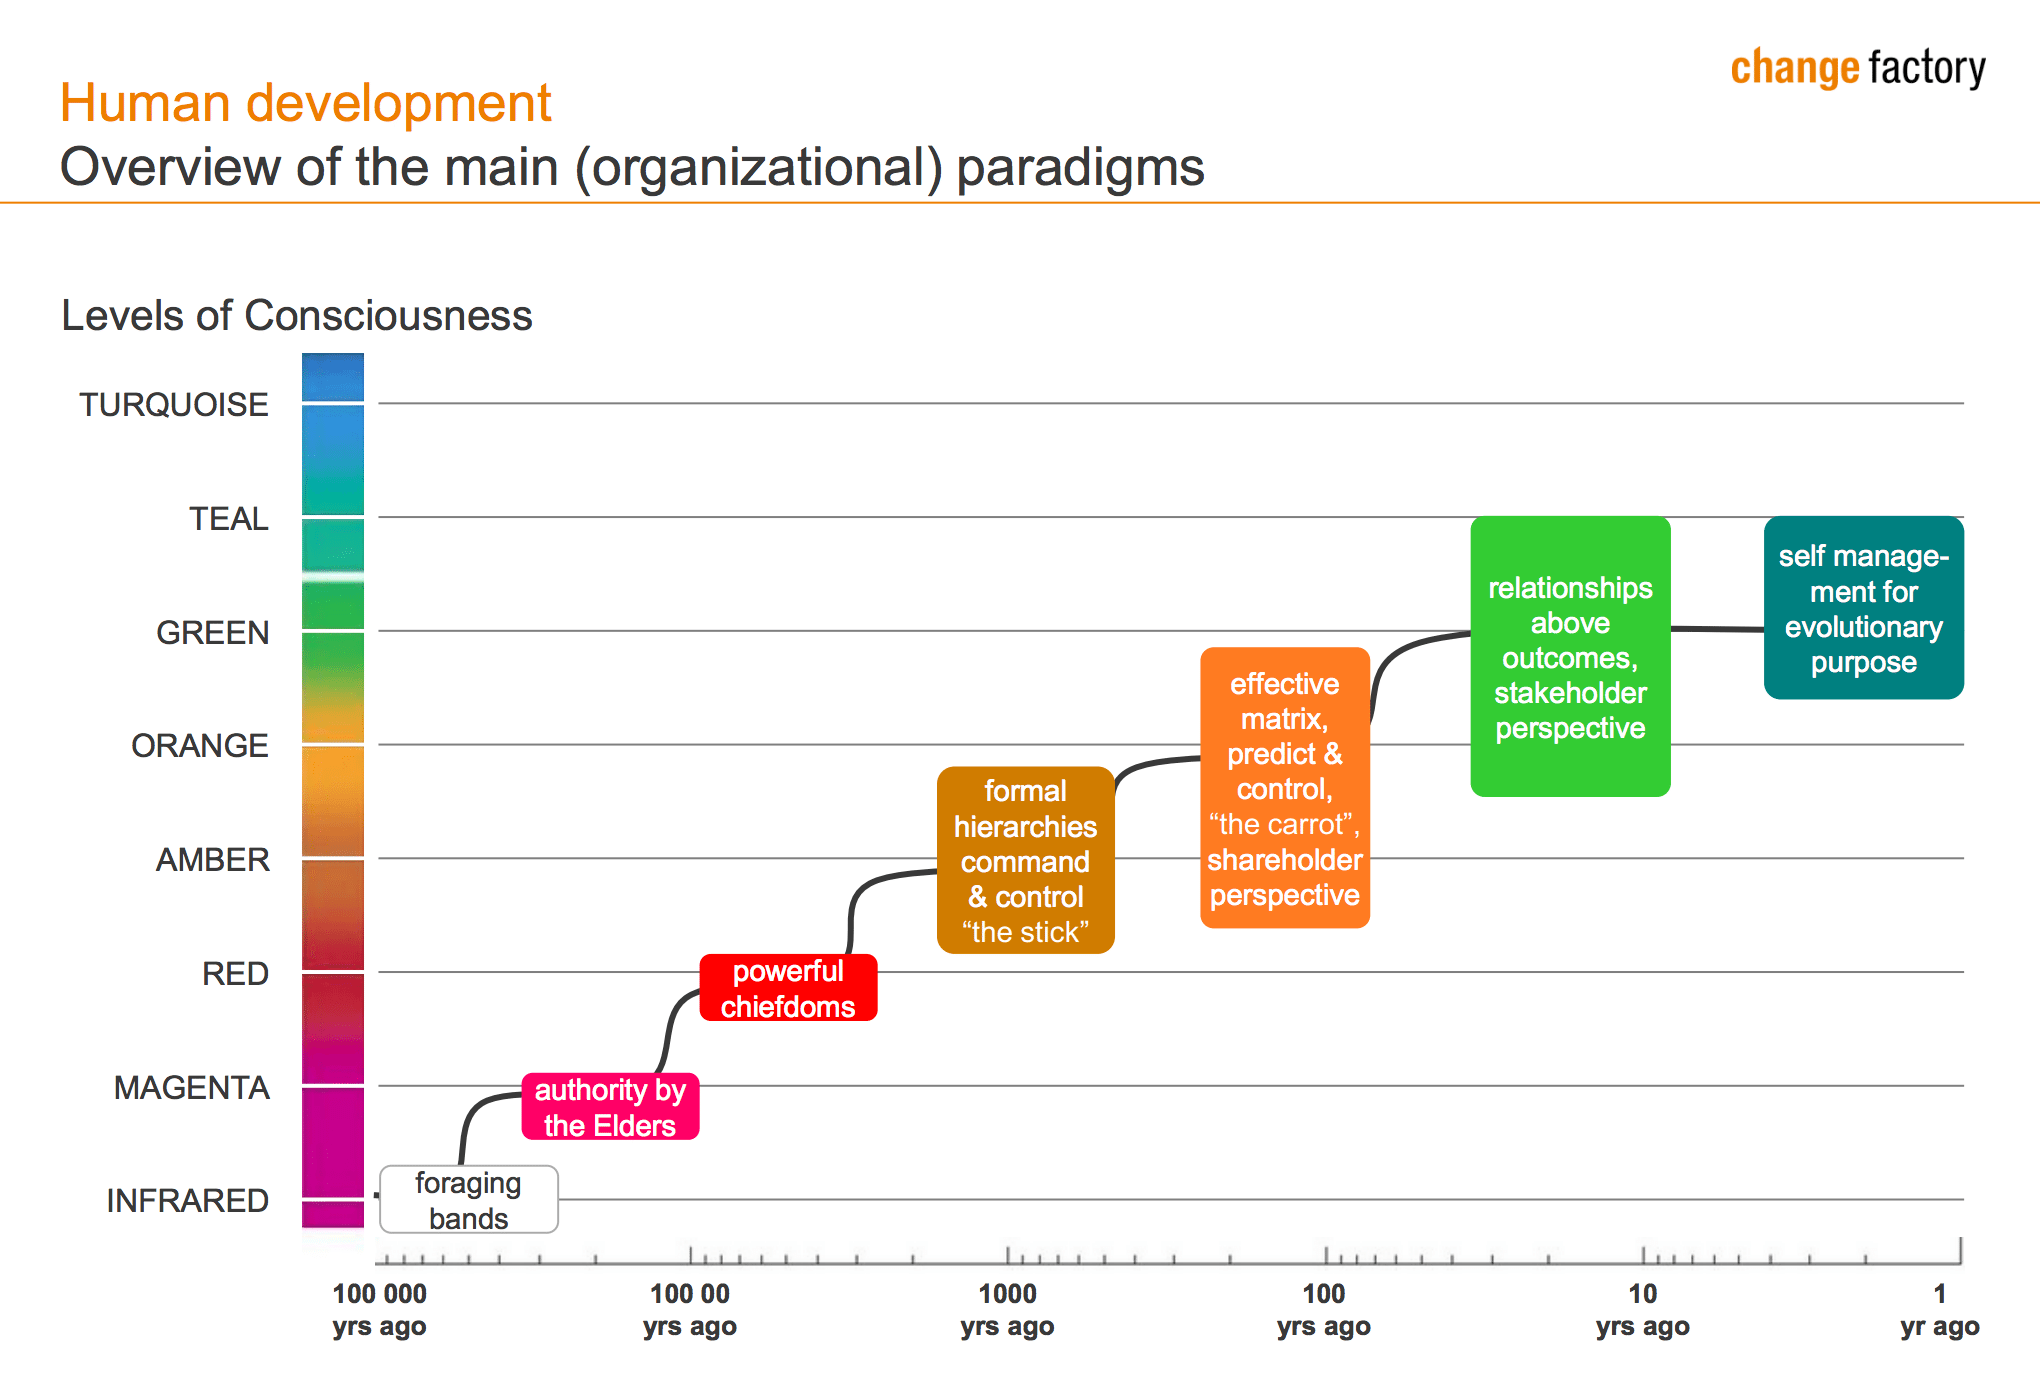 Human Development Reinventing Organizations Chart. Image source: Change Factory